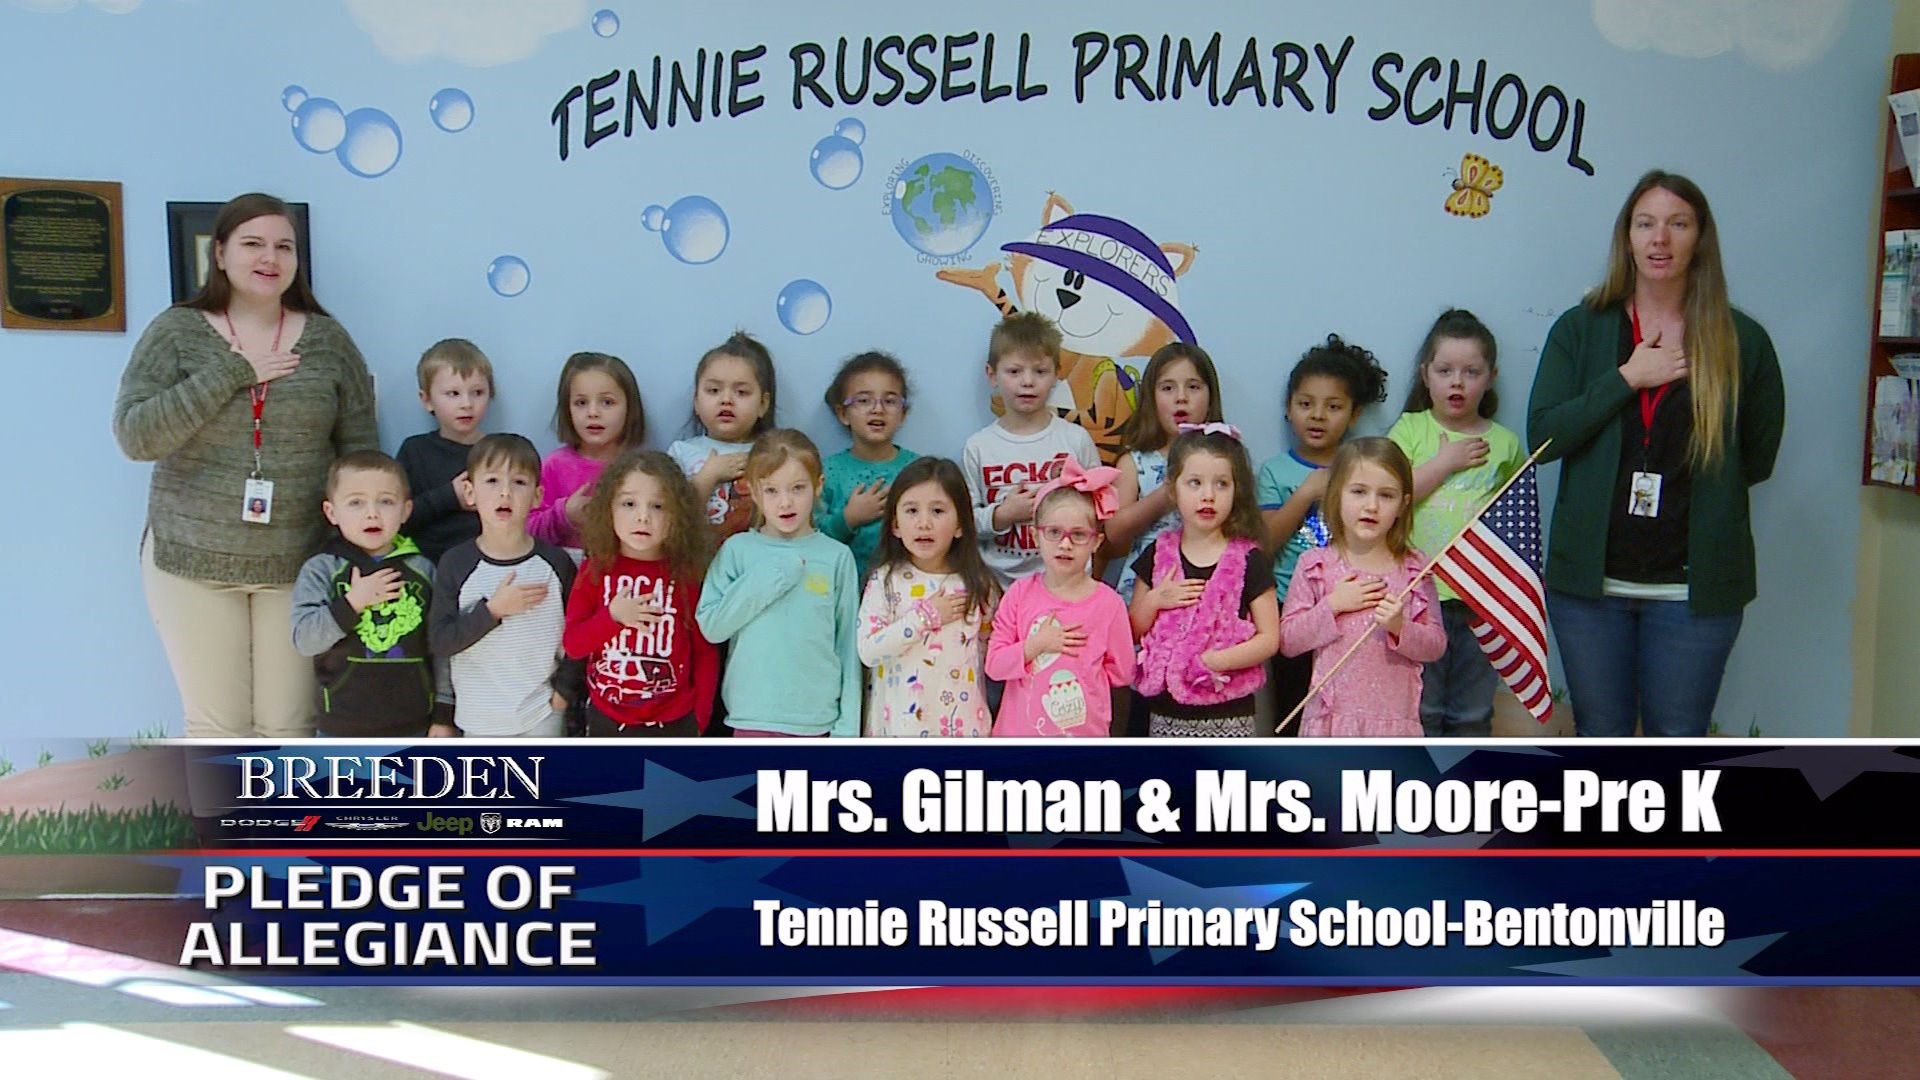 Mrs. Gilman & Mrs. Moore-Pre K Tennie Russell Primary School, Bentonville